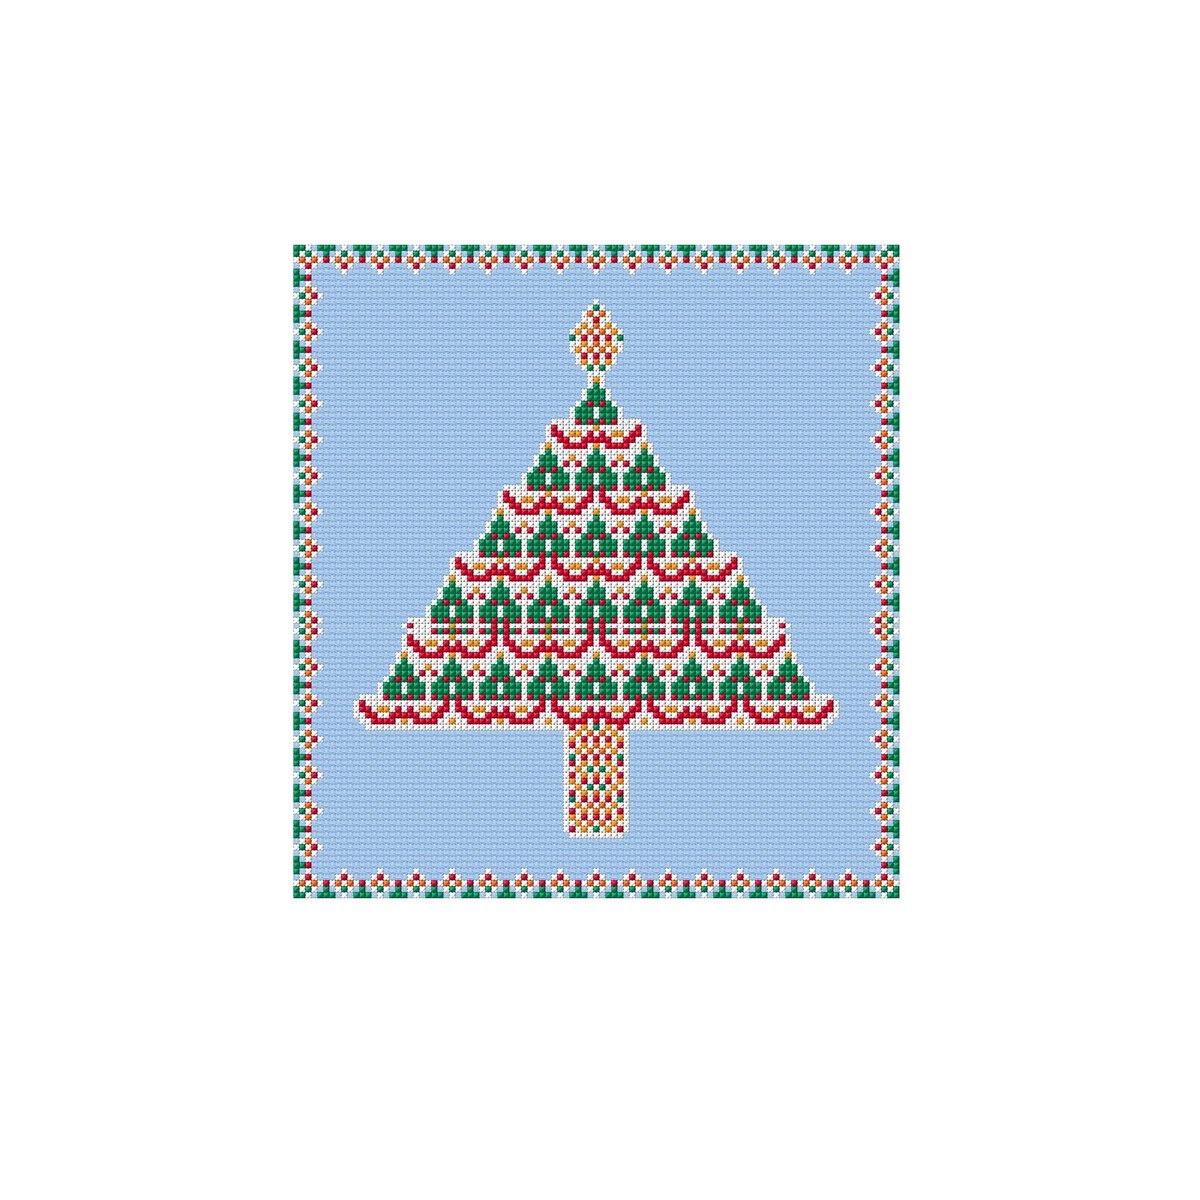 Merry Christmas Tree Cross Stitch Pattern Green Snowflakes Instant Pdf File Chart 1 Greeting Card Digital Download Diy Counted Geometric tuppu.net/f6f19df #Etsy #Crossstitchfurnish #BeginnerPattern